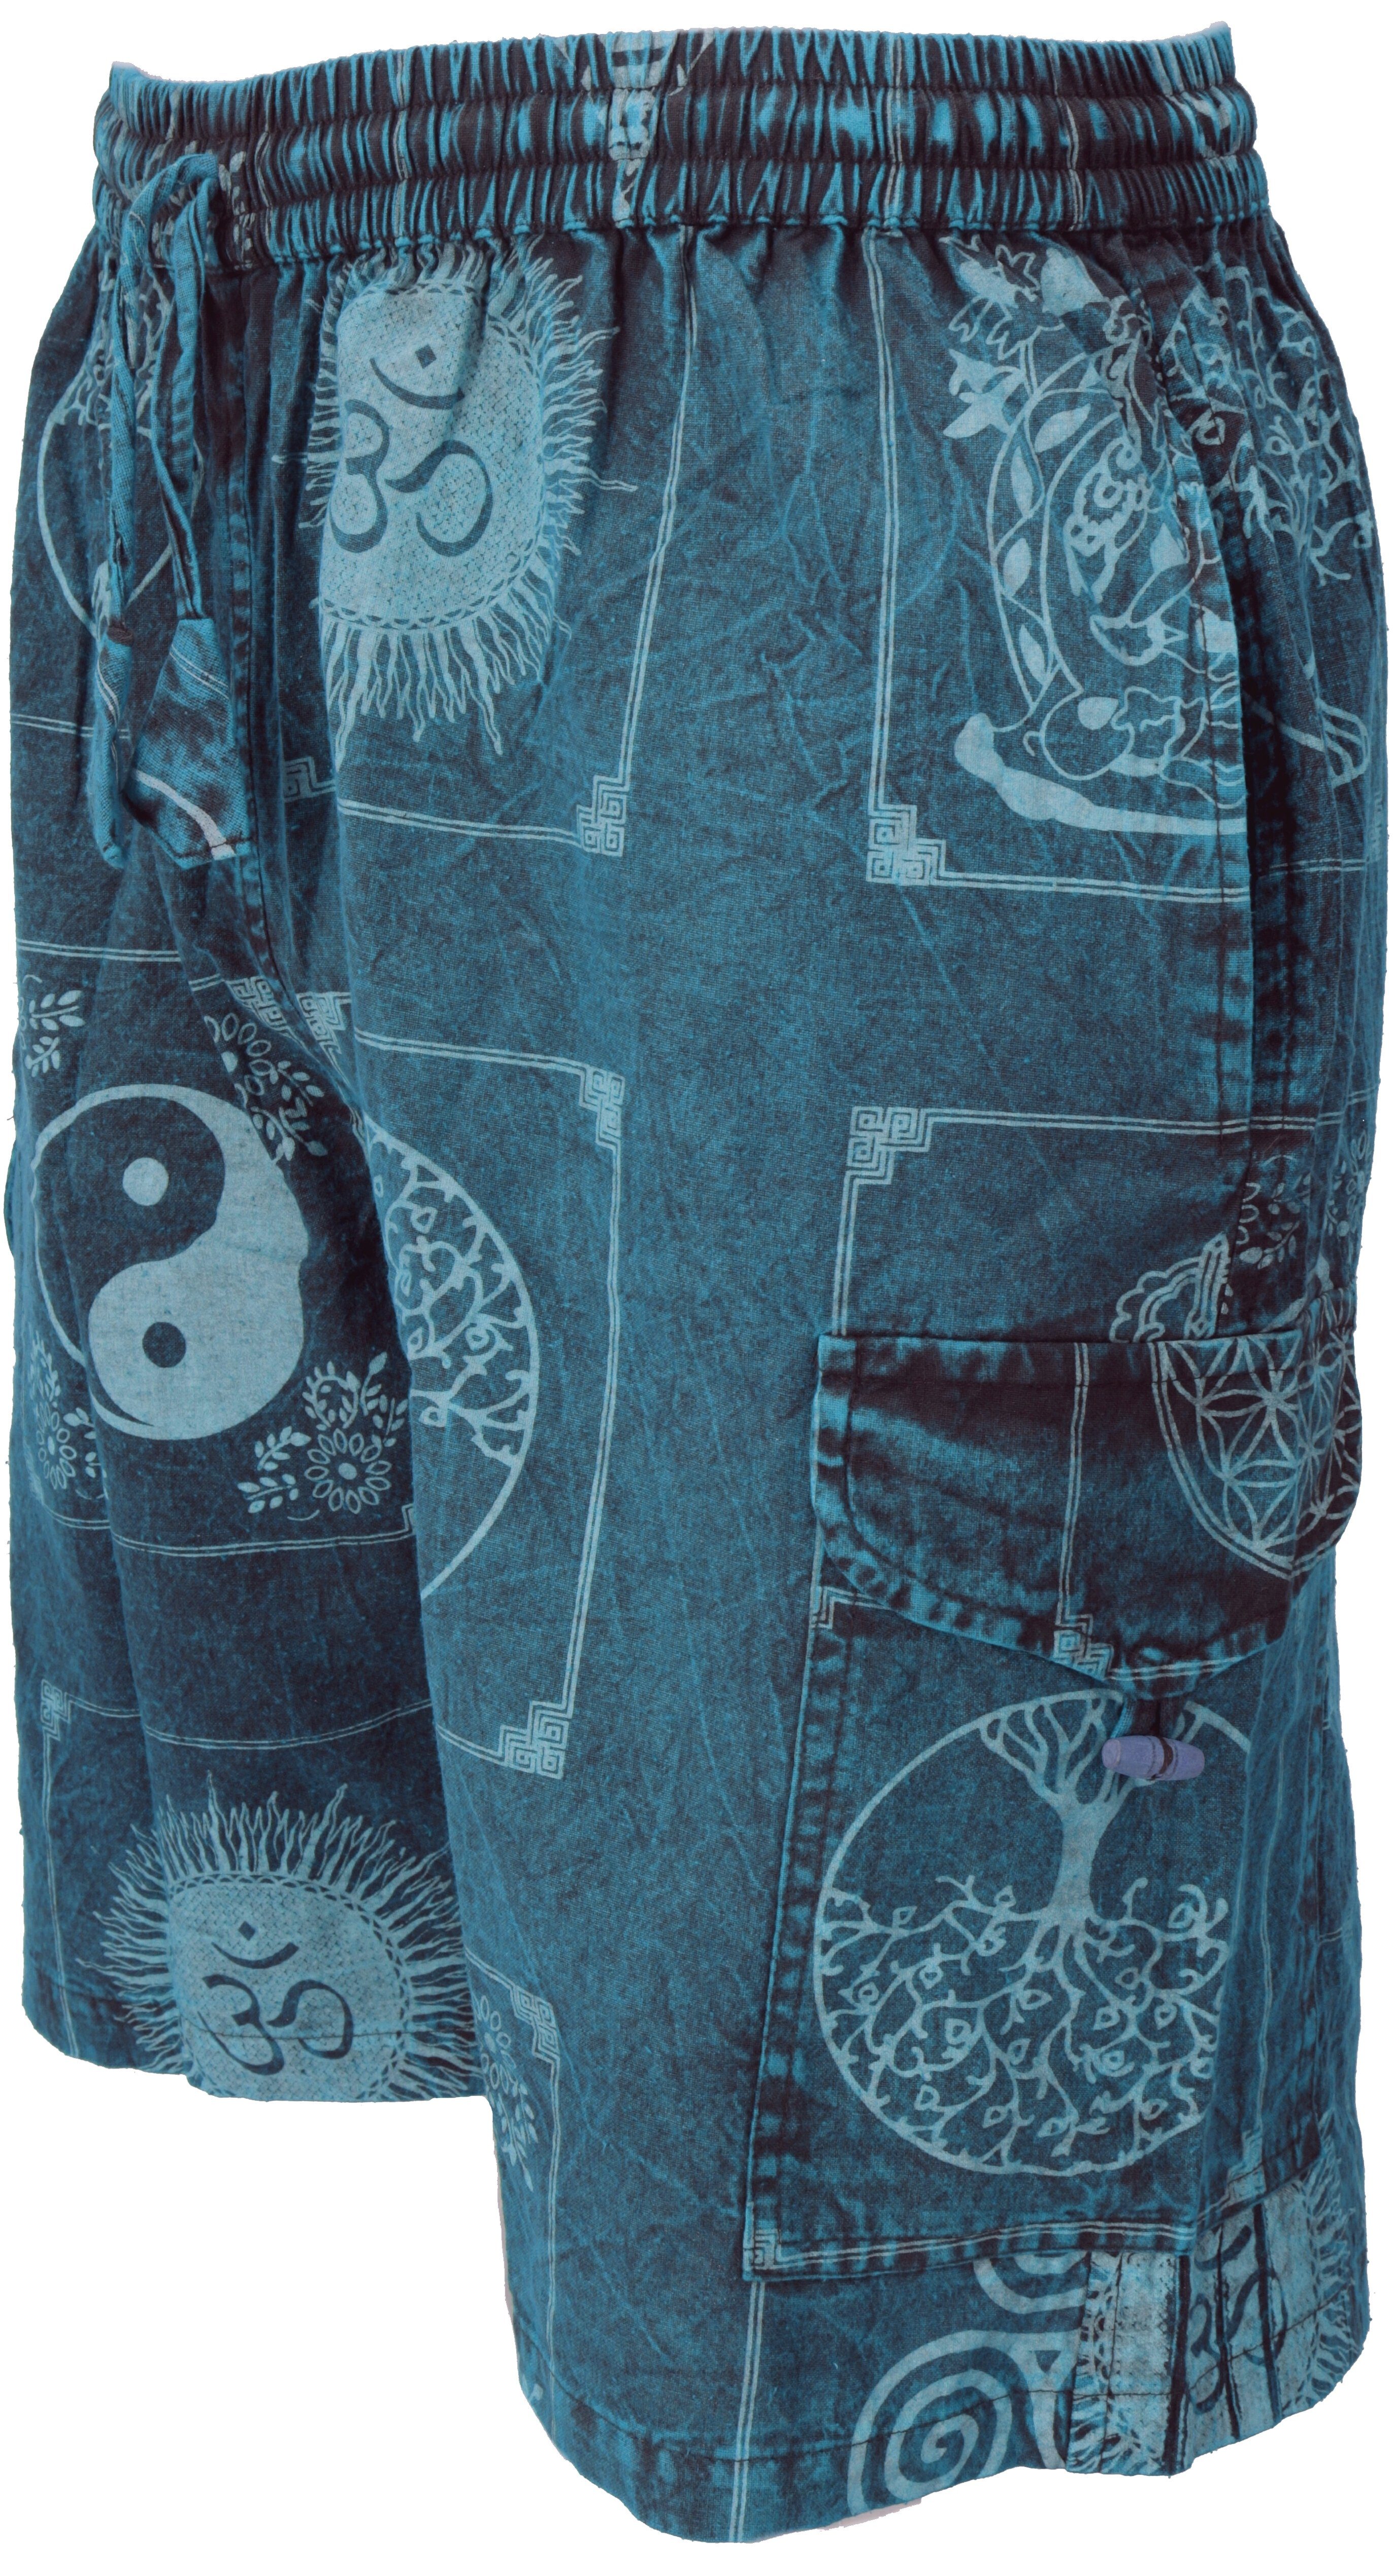 Guru-Shop Relaxhose Ethno Style, Hippie, Shorts alternative Nepal blau Ethno -.. Yogashorts, Bekleidung stonewash aus